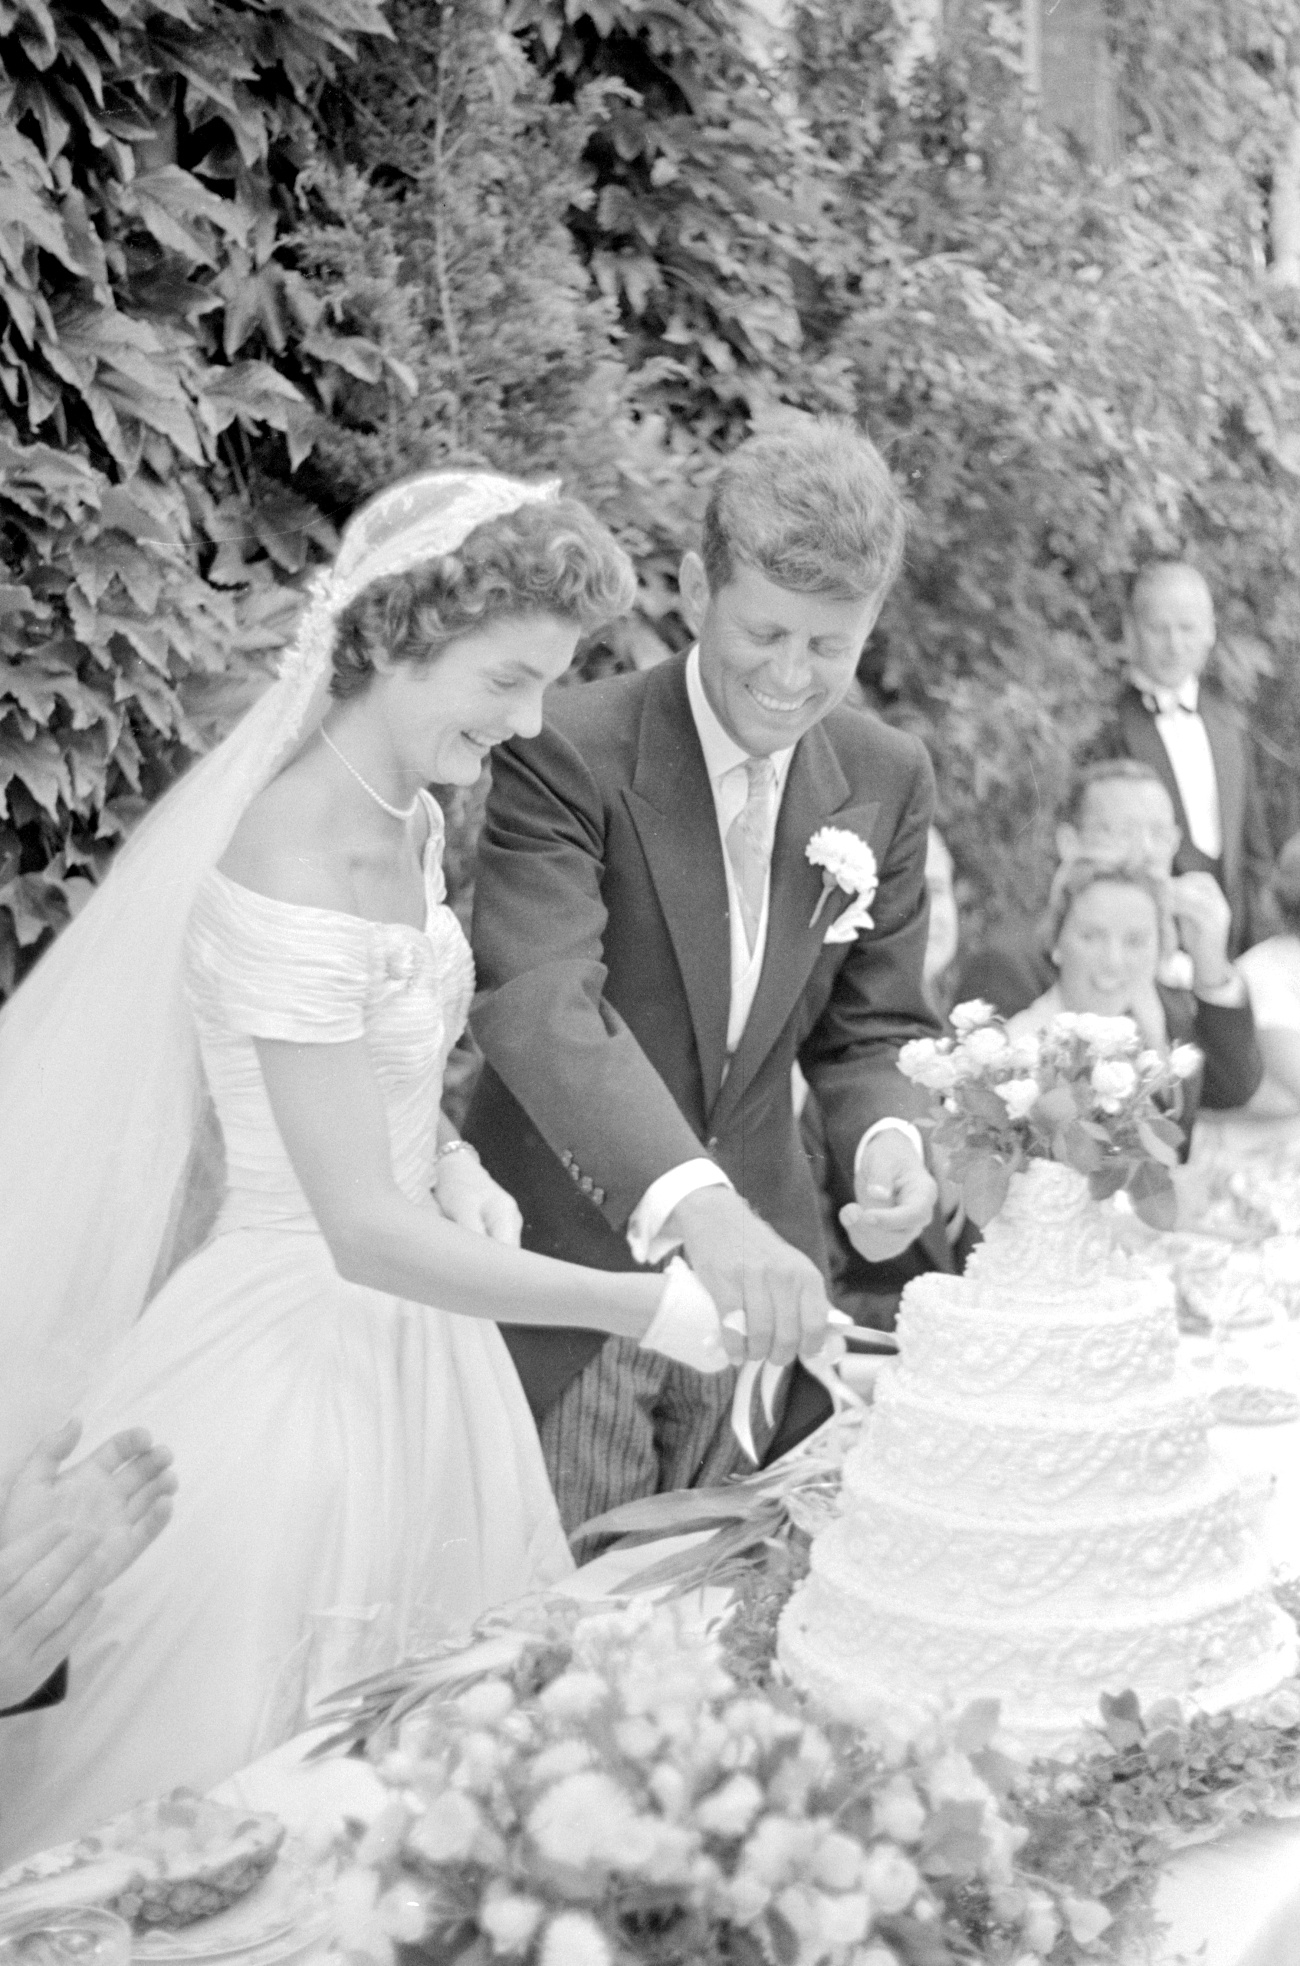 JFK wedding cake cutting